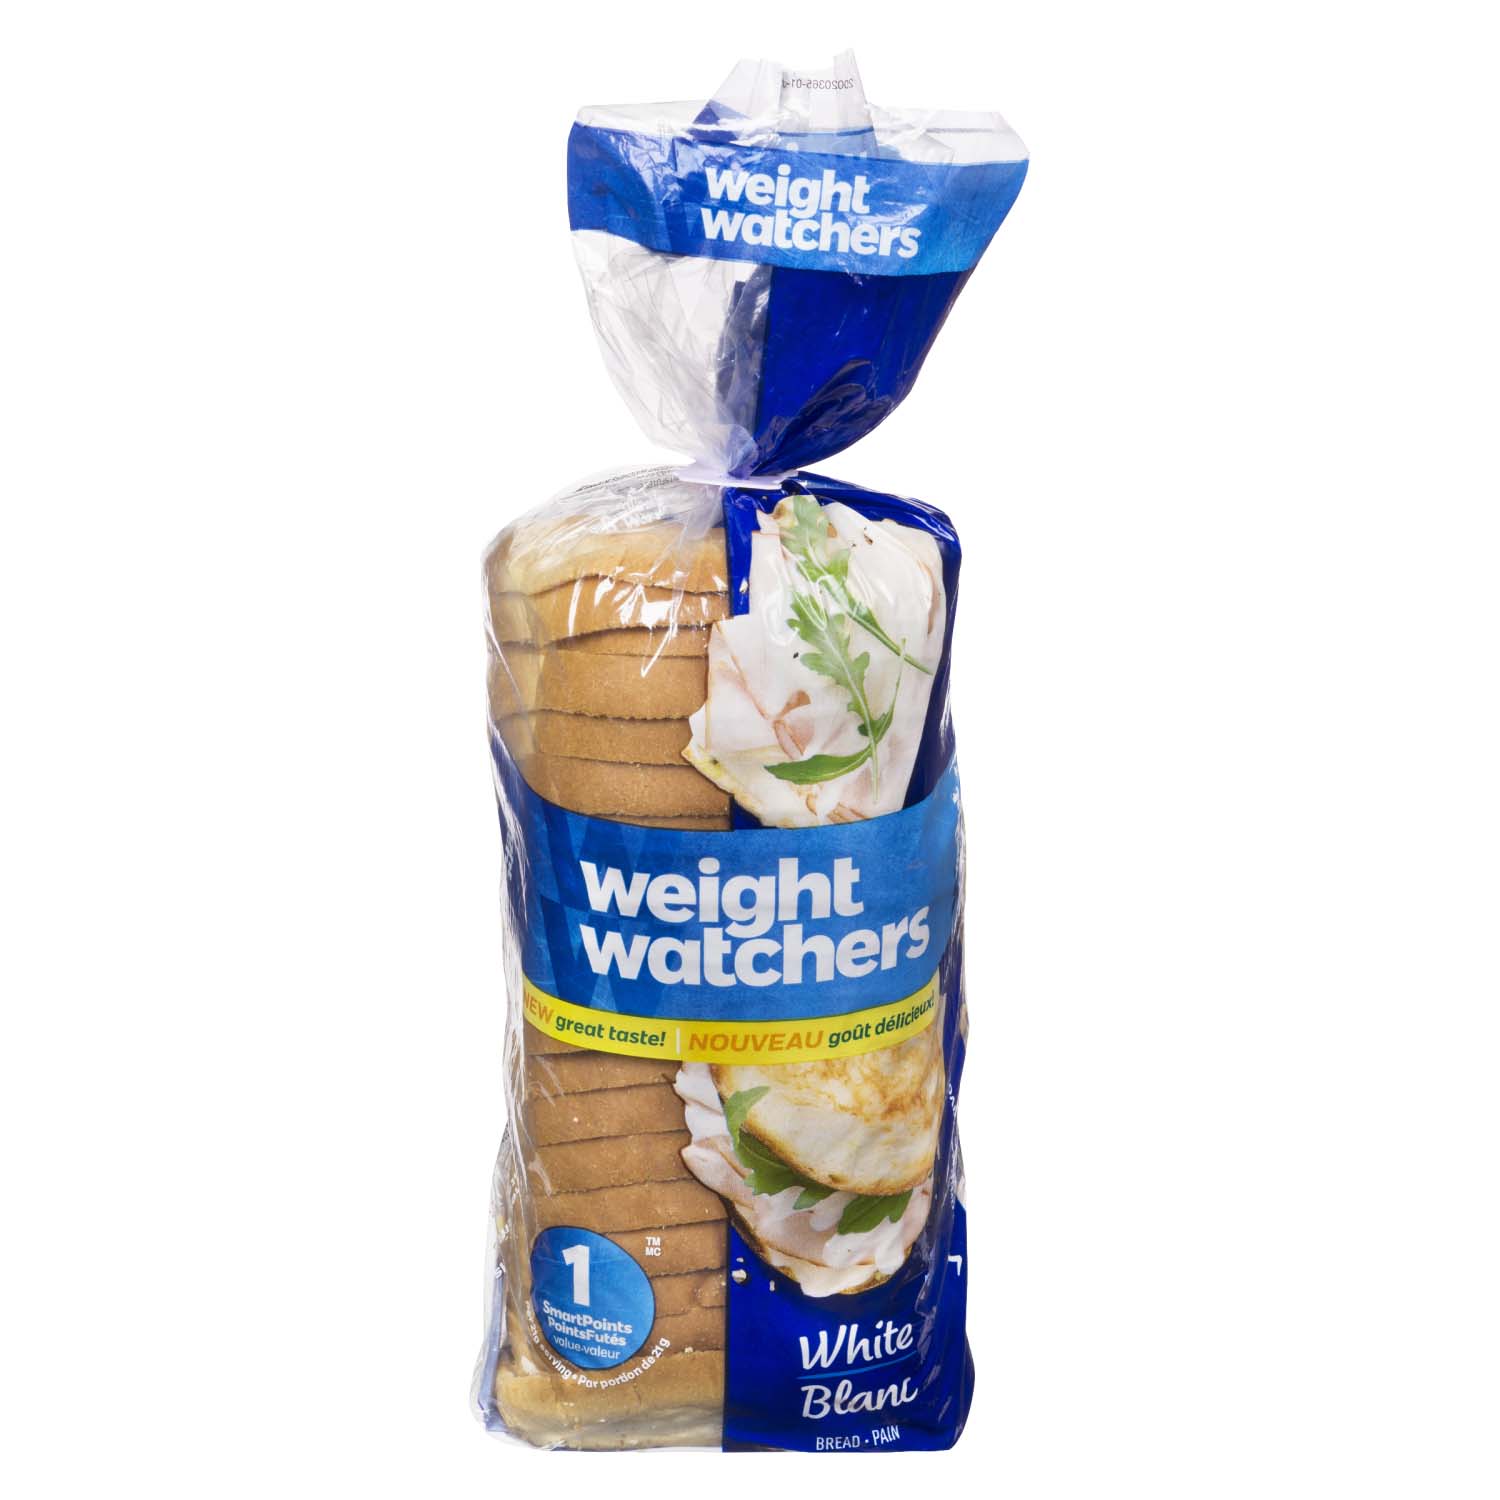 Weight Watchers bread range gains listings in Canada's Longo